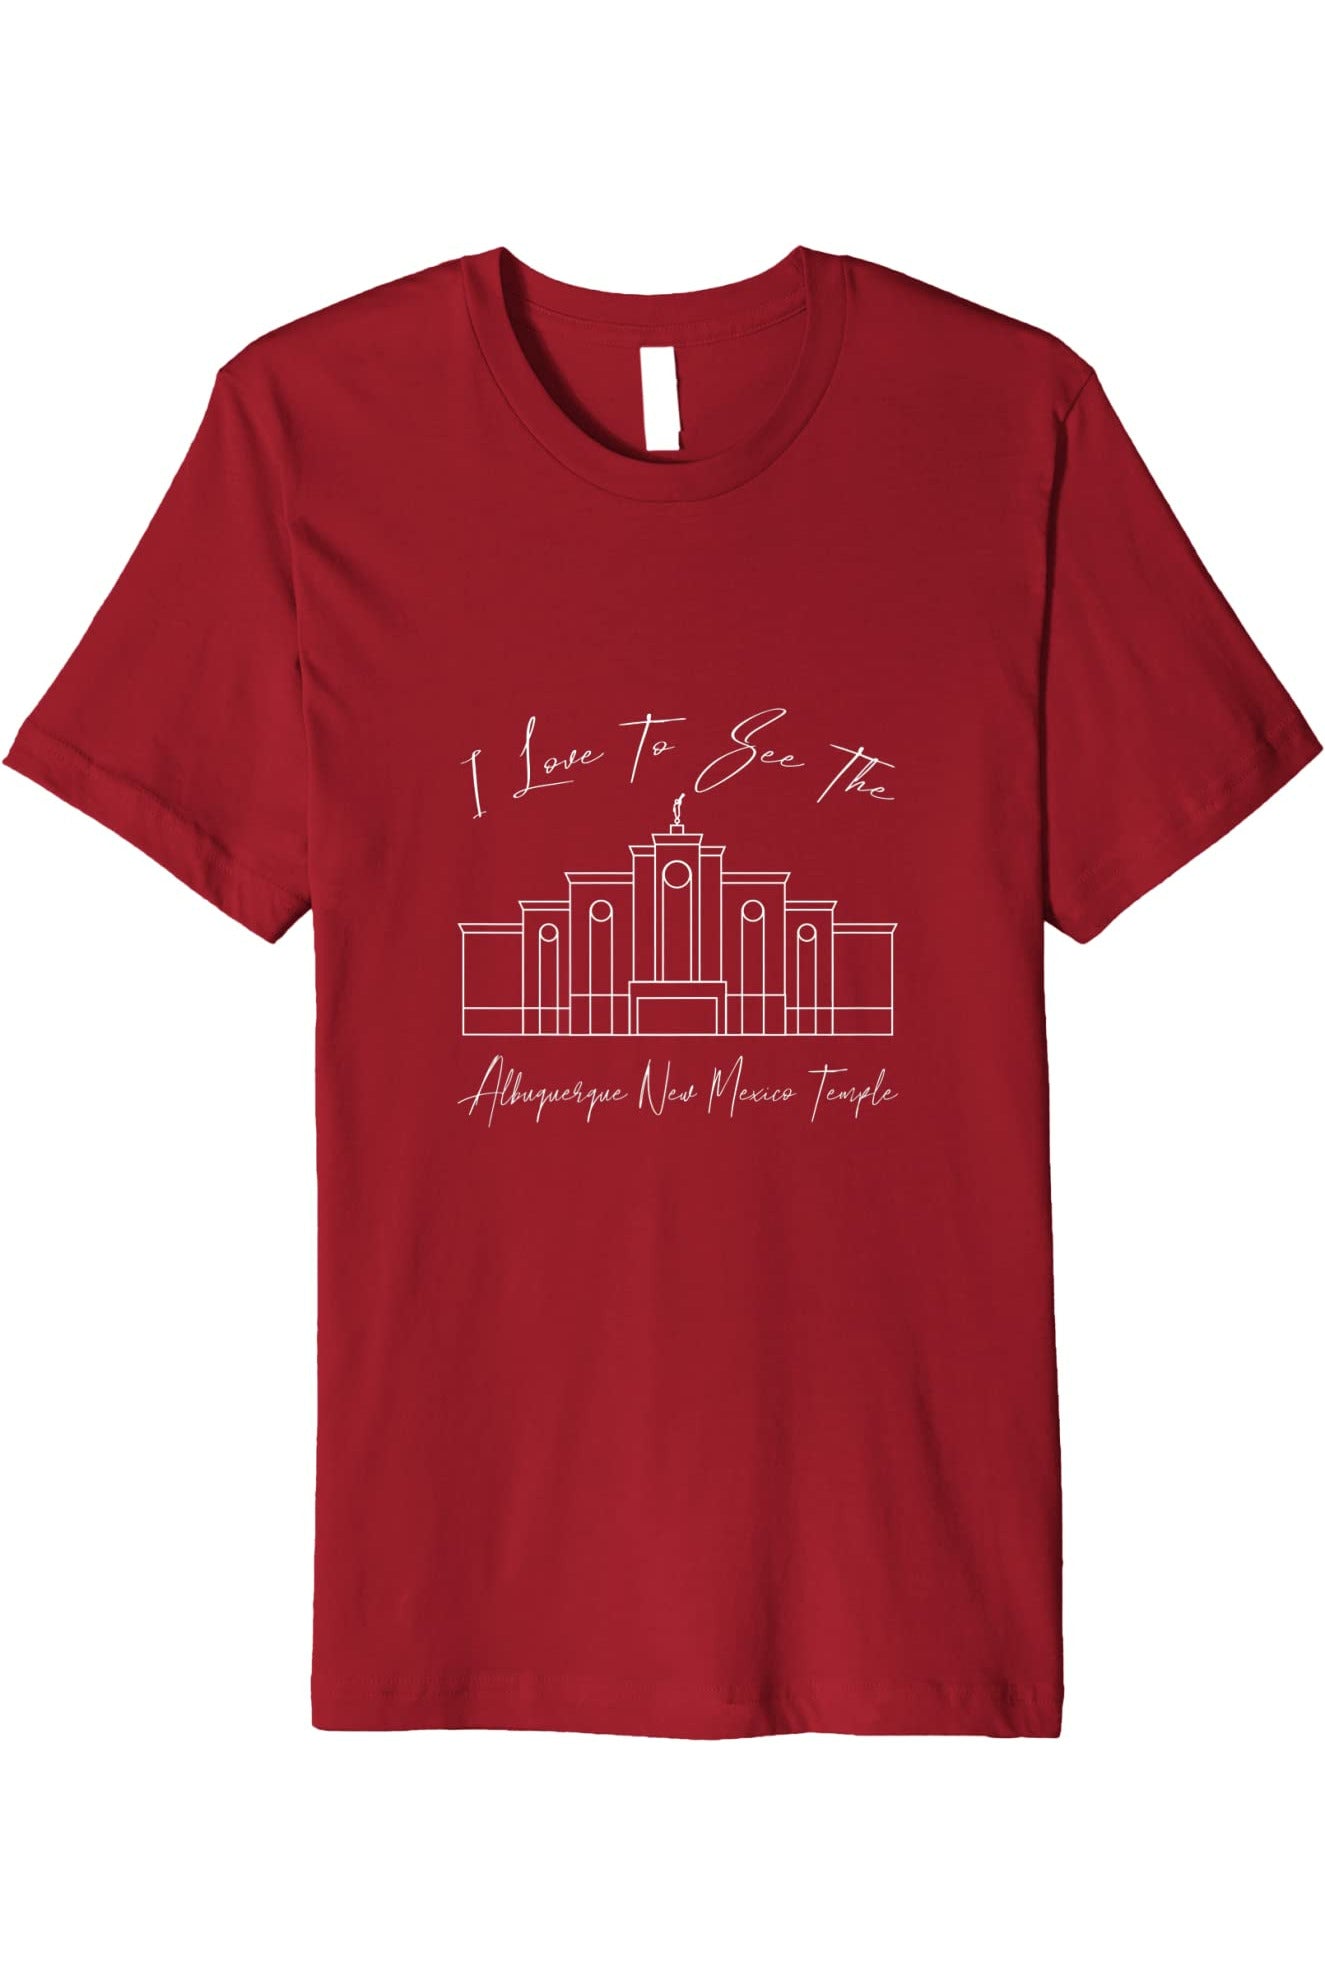 Albuquerque New Mexico Temple T-Shirt - Premium - Calligraphy Style (English) US